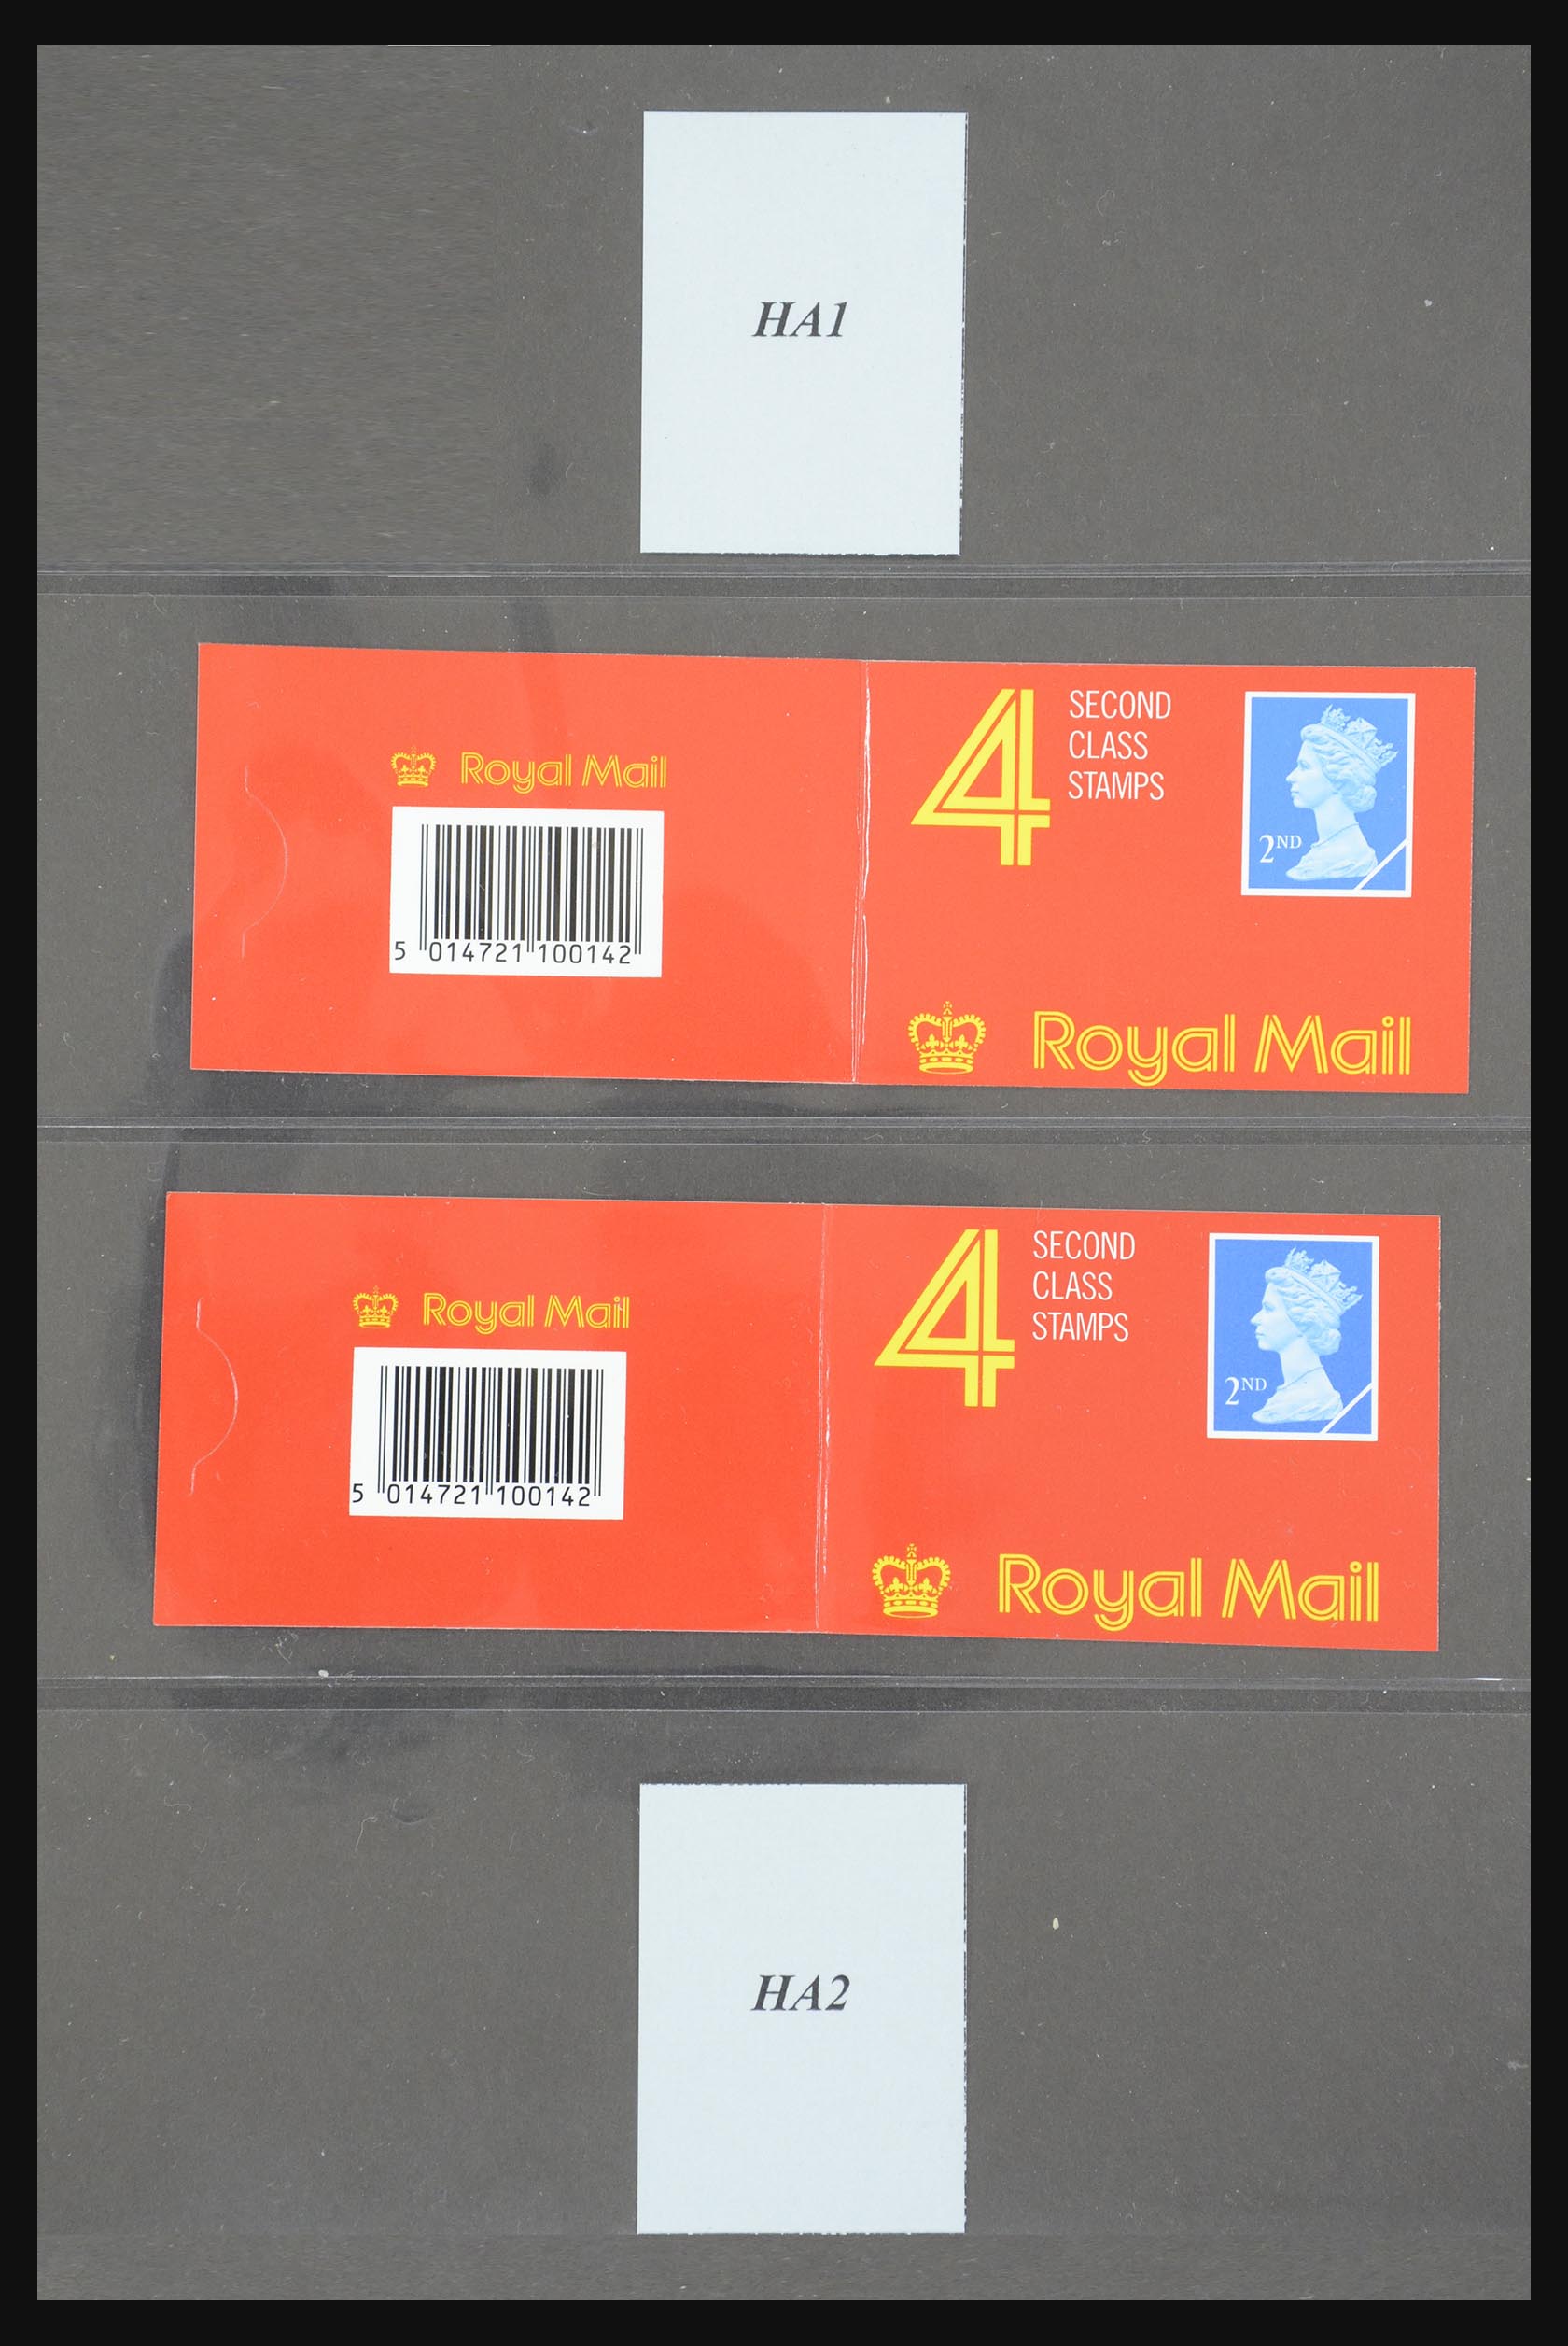 31960 001 - 31960 Great Britain stampbooklets 1989-2000.